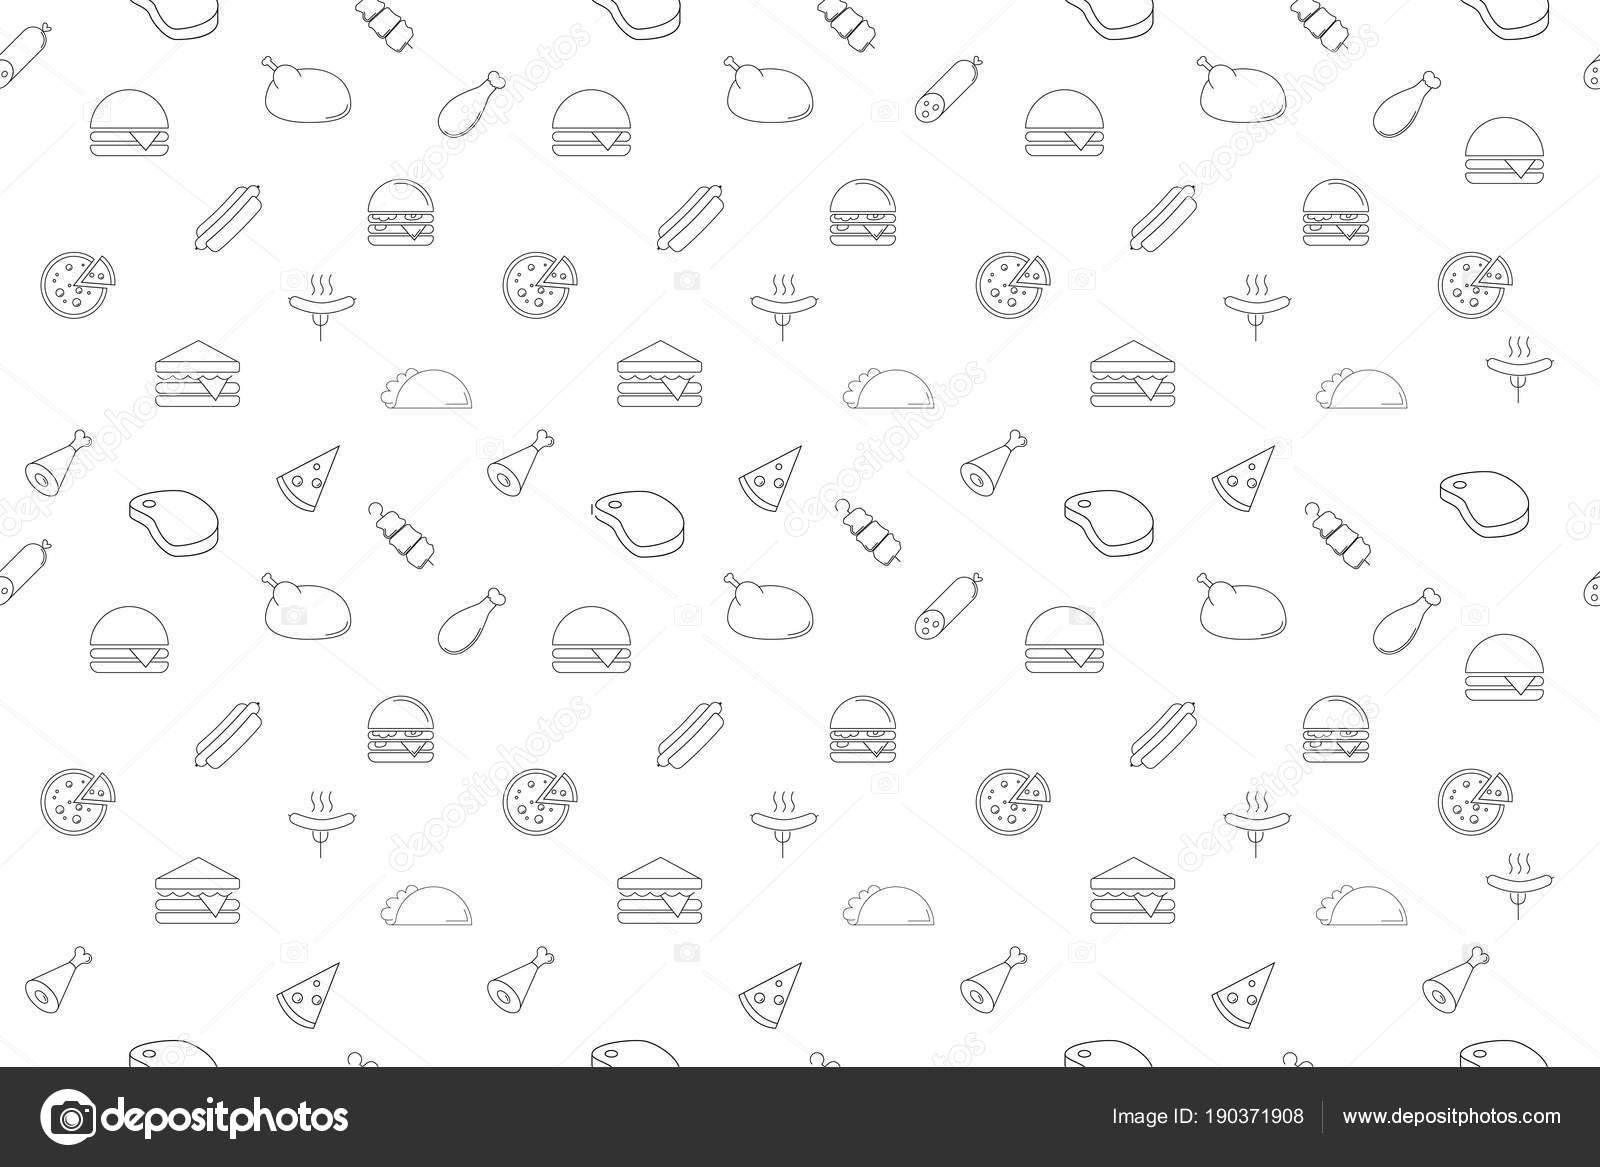 https://st3.depositphotos.com/11601342/19037/v/1600/depositphotos_190371908-stock-illustration-vector-meat-pattern-meat-seamless.jpg